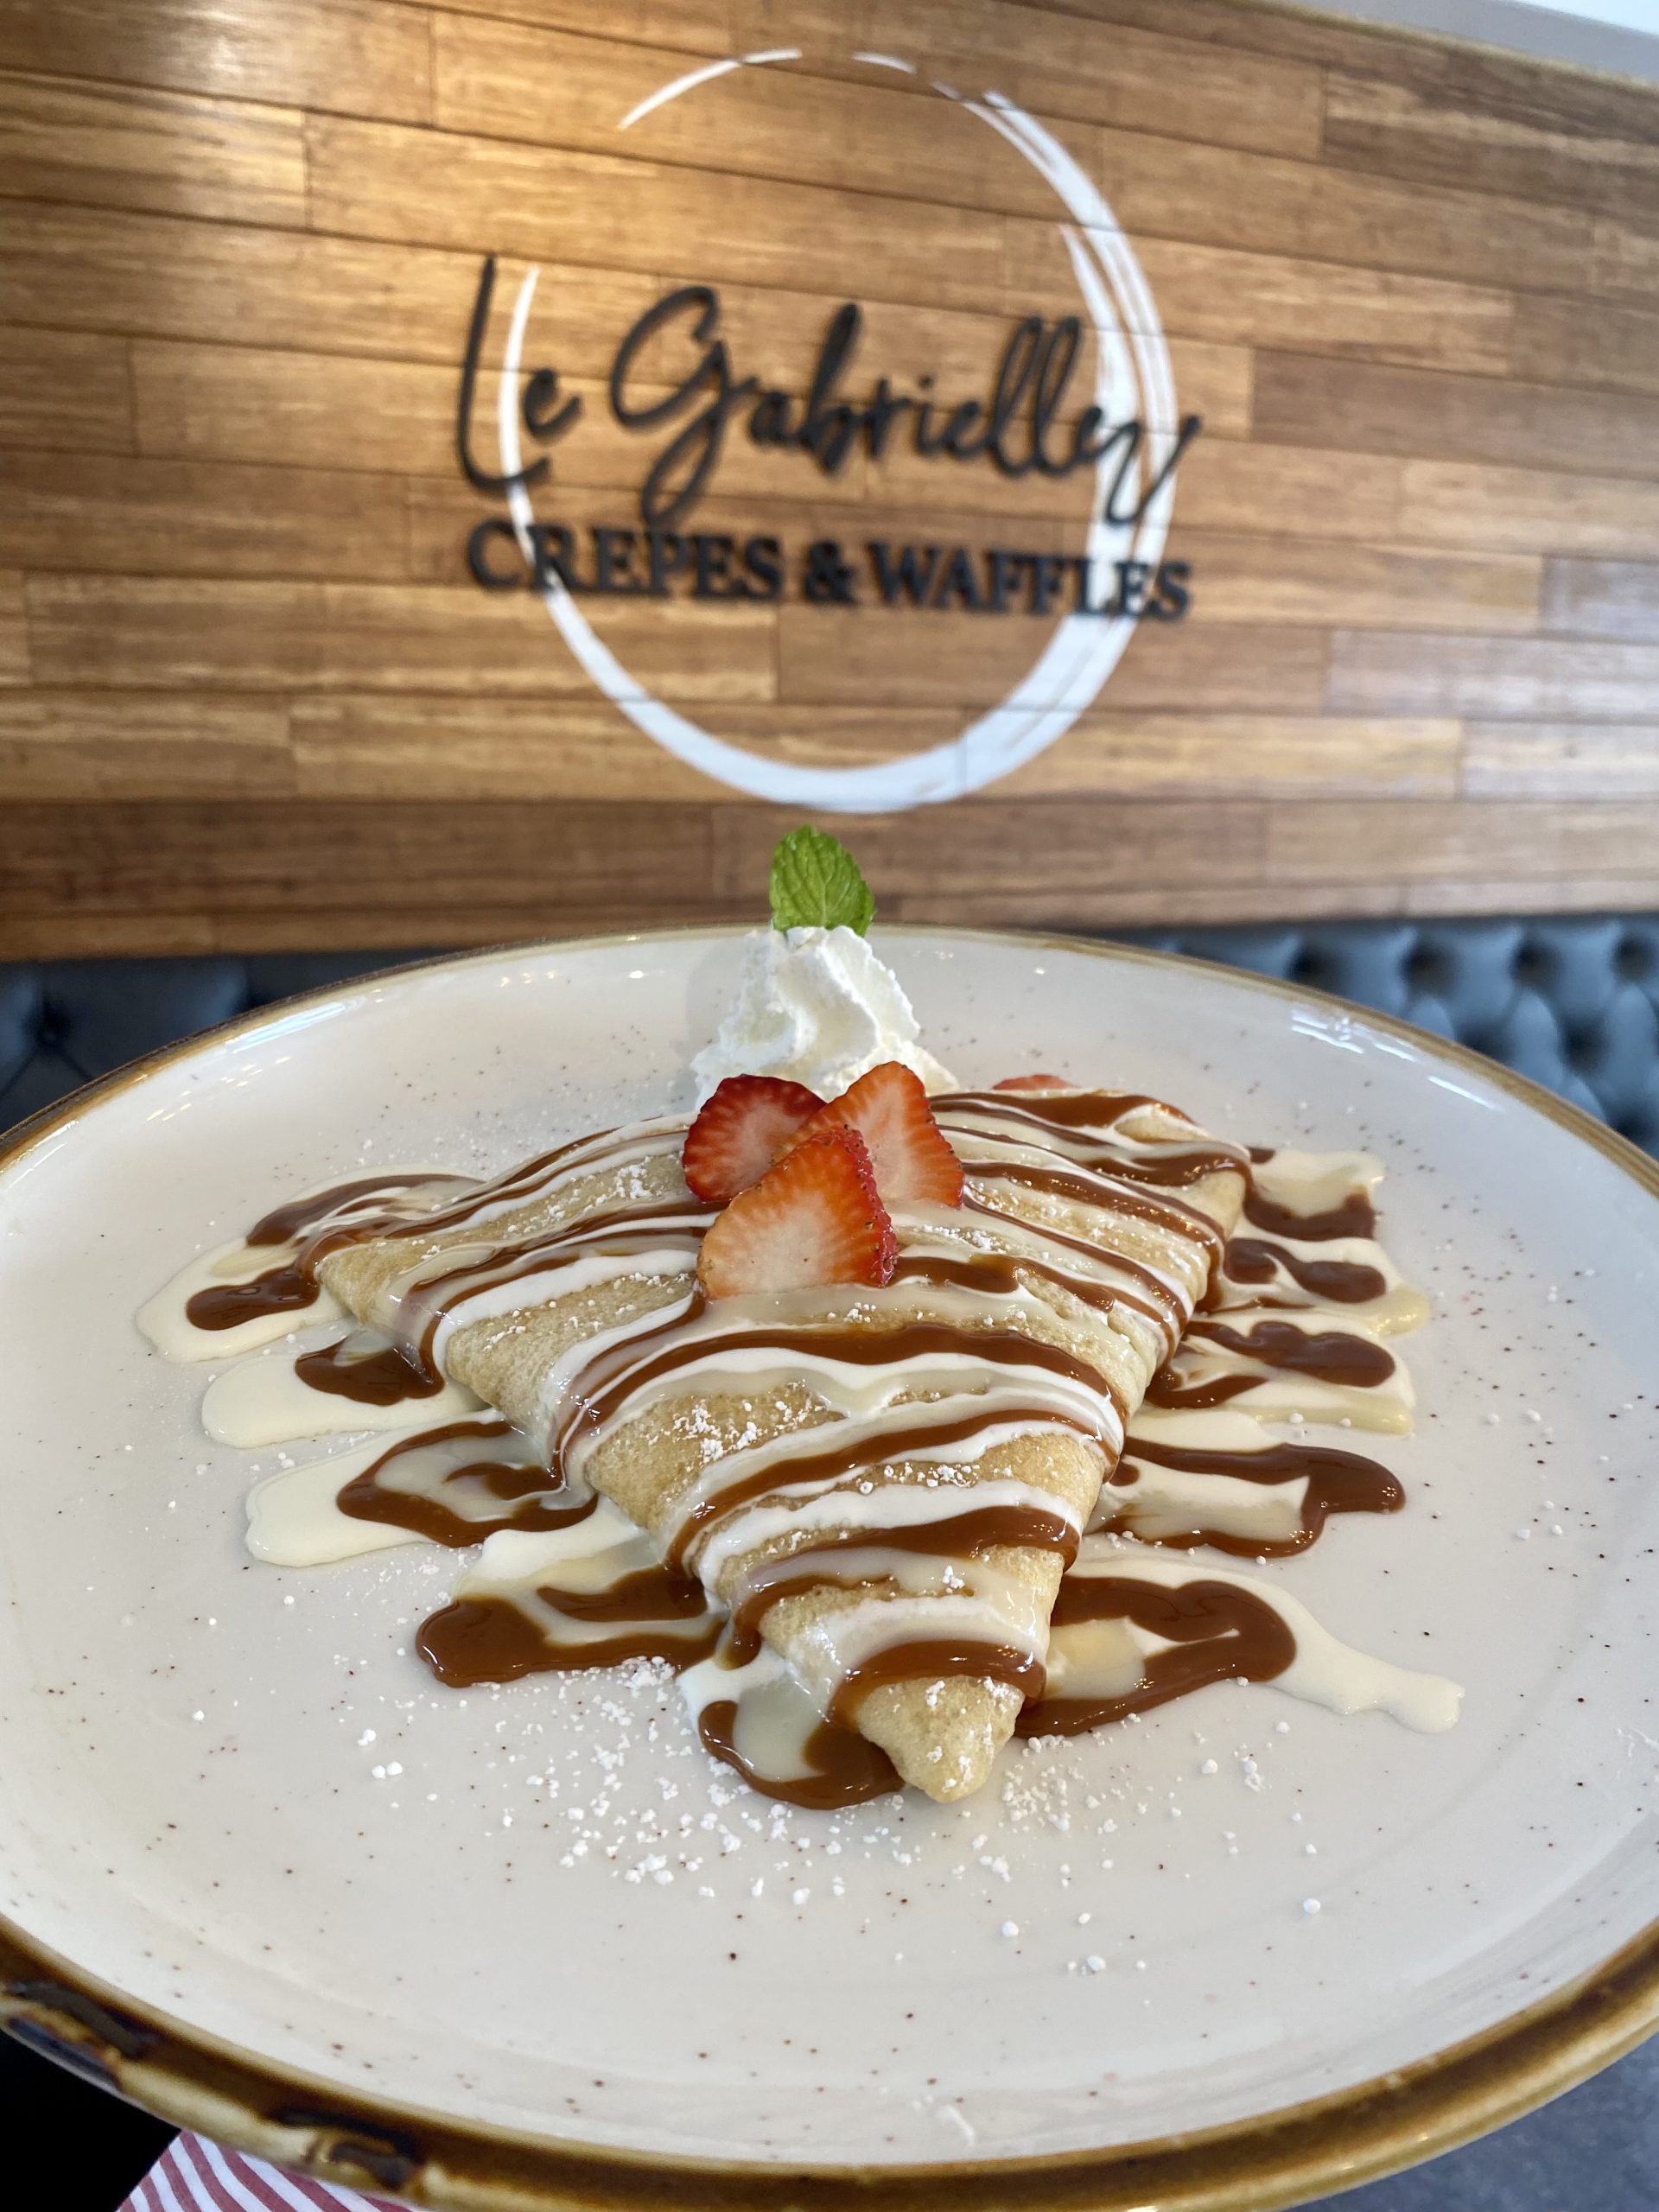 La Gabrielle Crepes & Waffles Breakfast & Brunch Restaurant